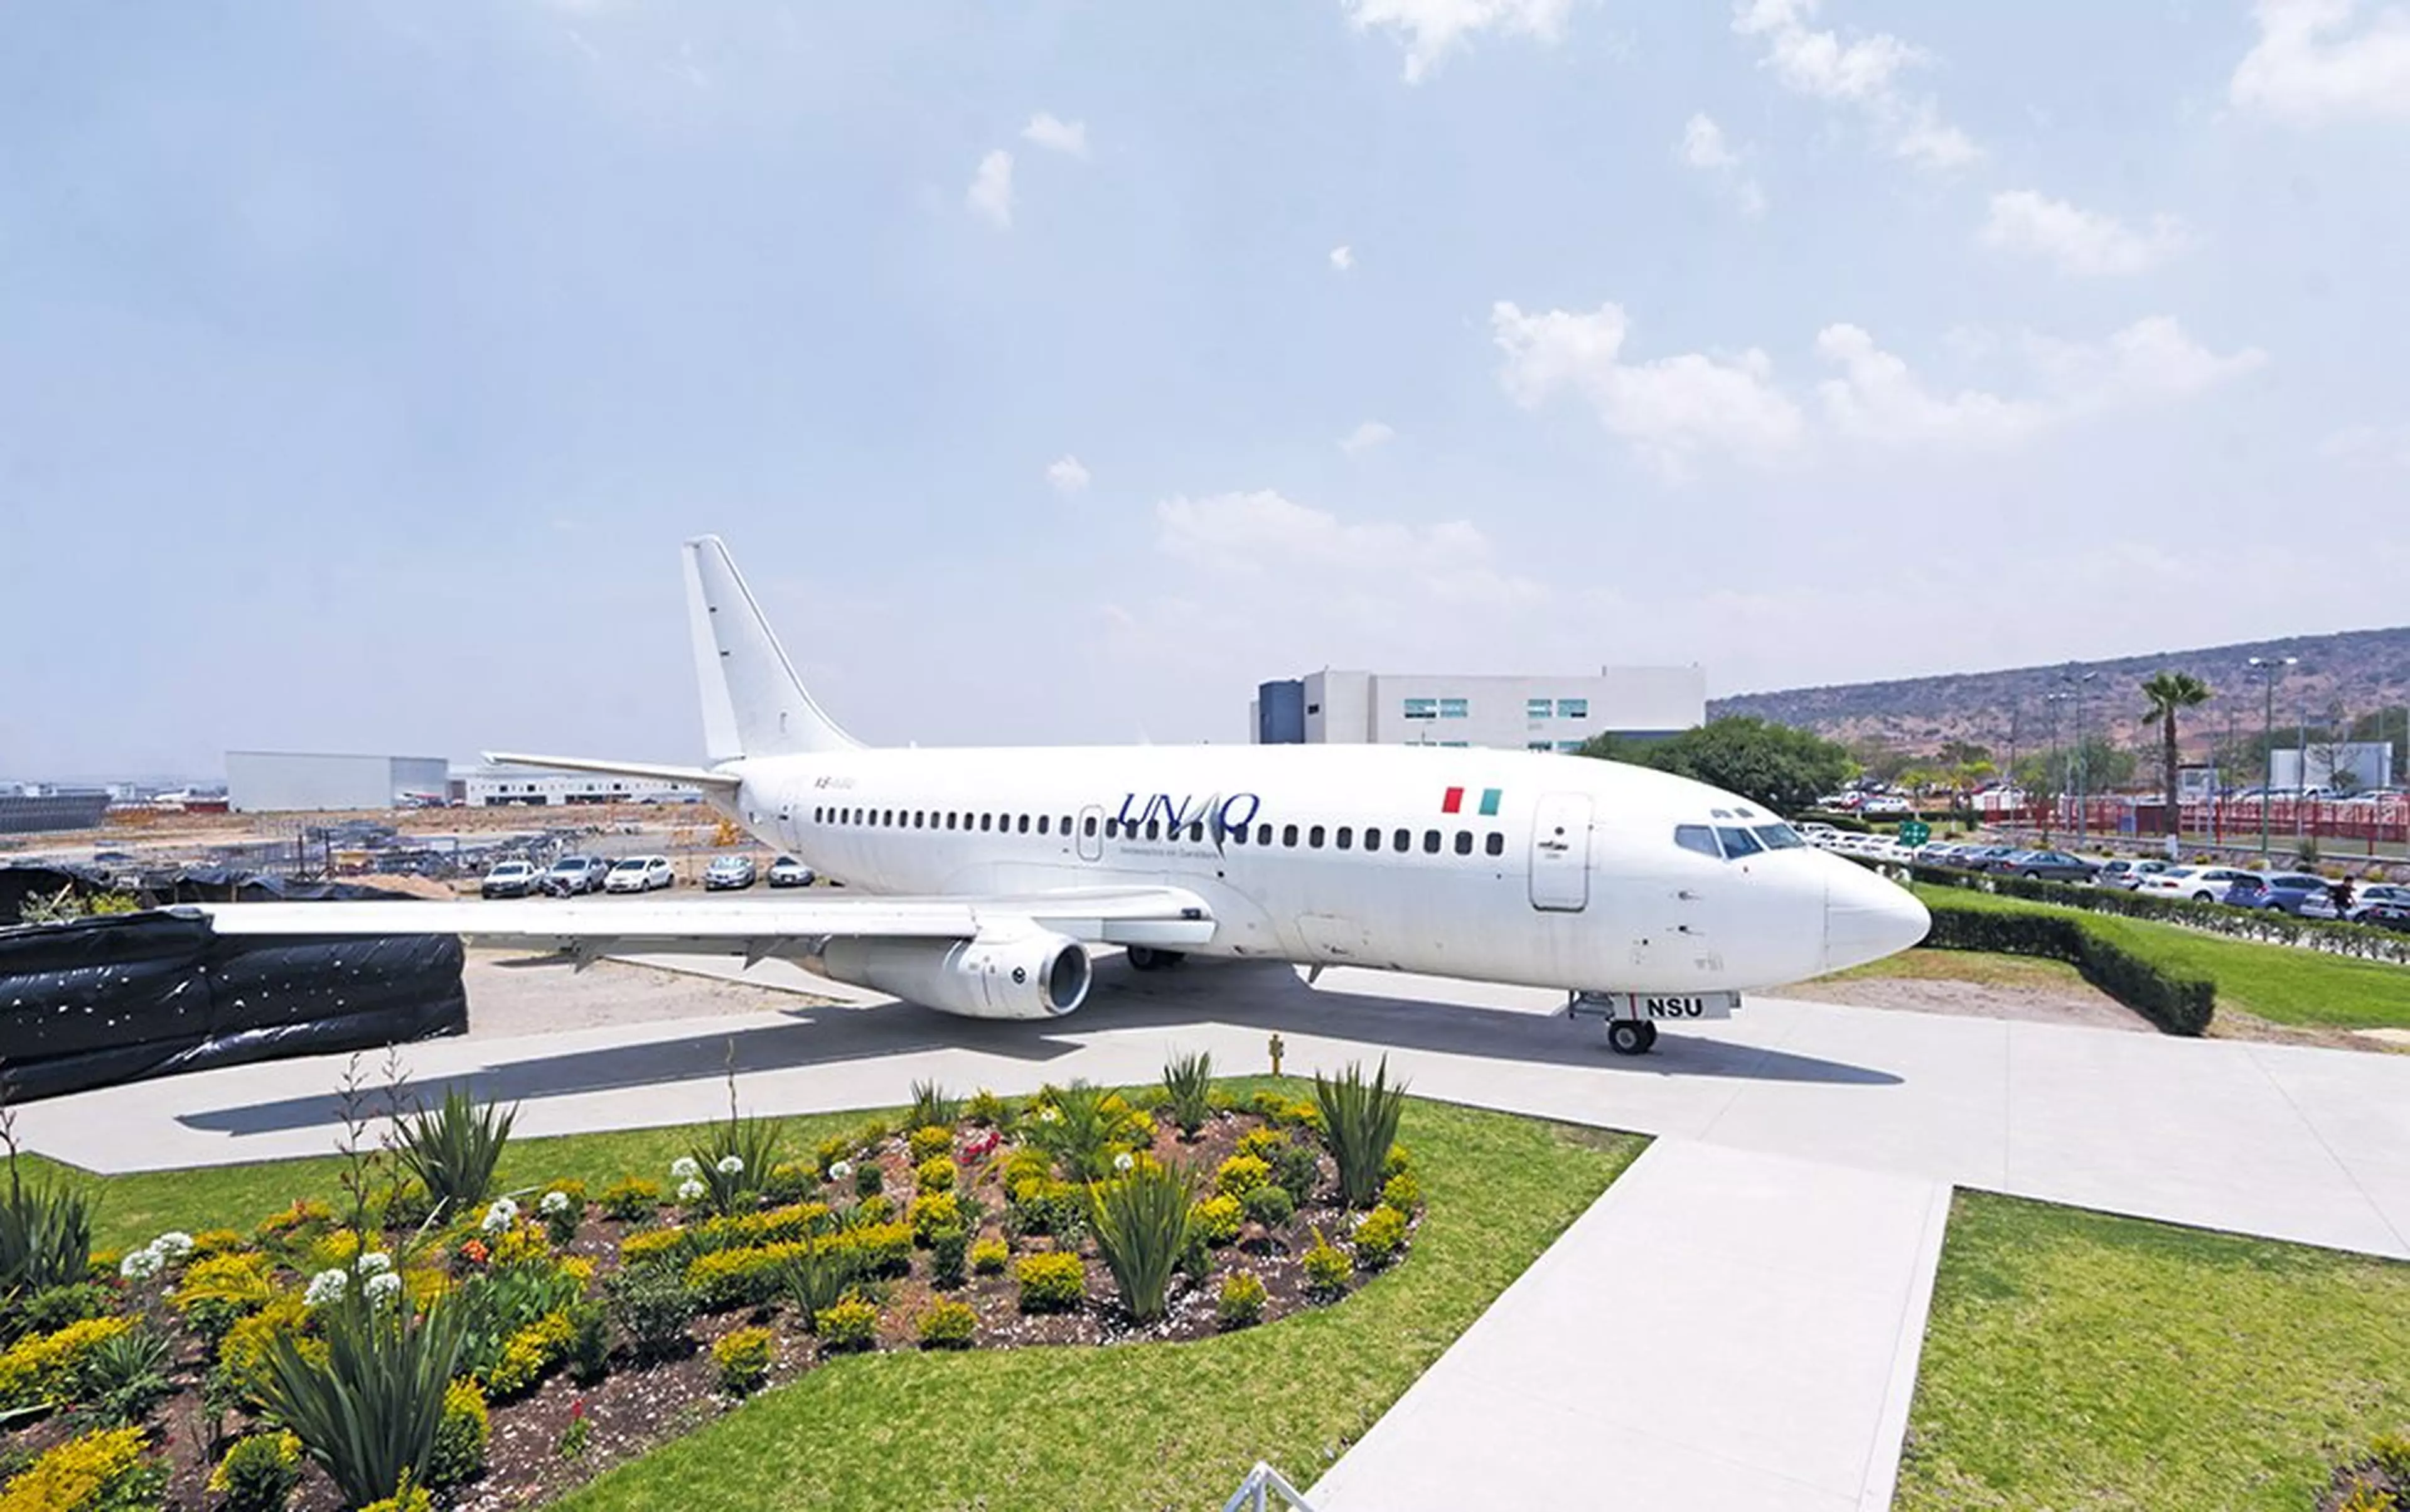 UNAQ university passenger aircraft for student training.